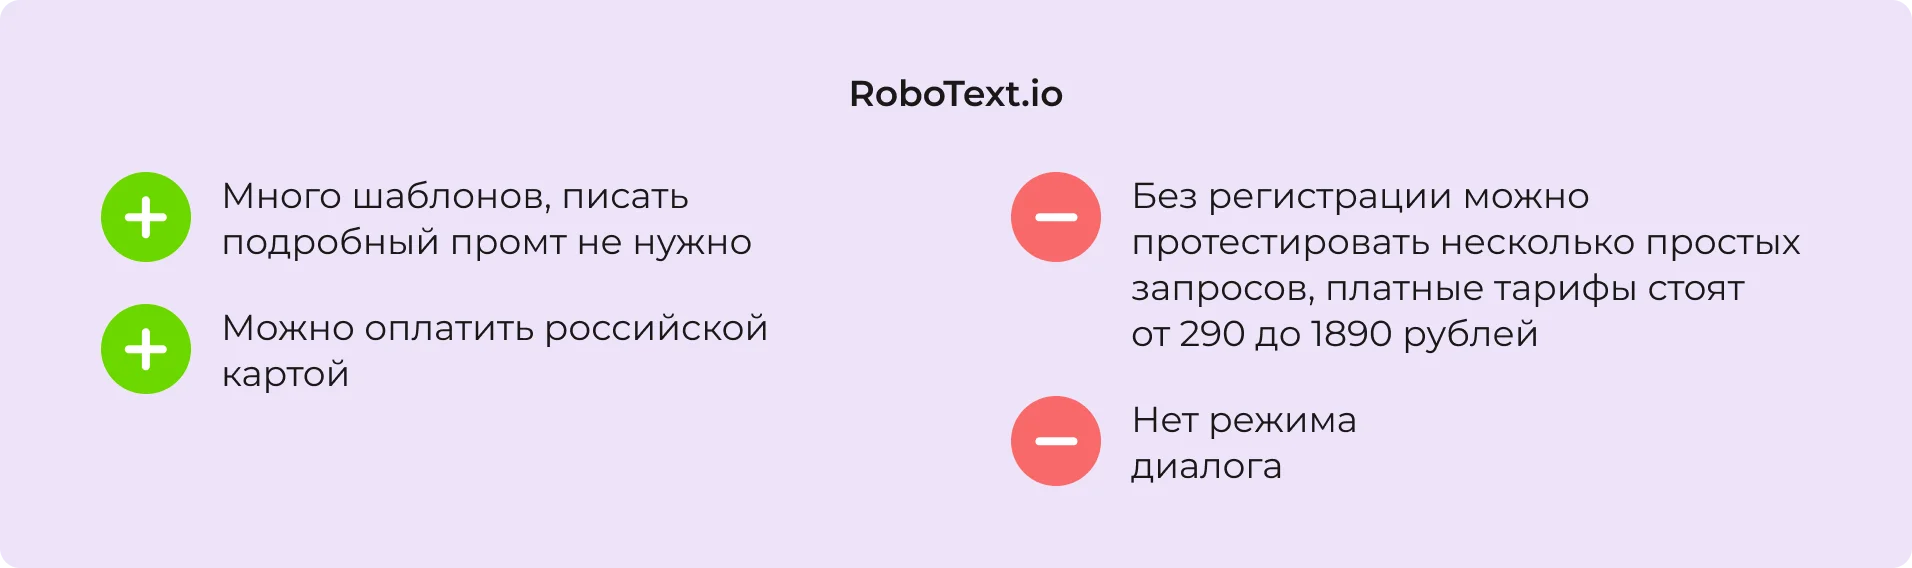 Плюсы и минусы RoboText